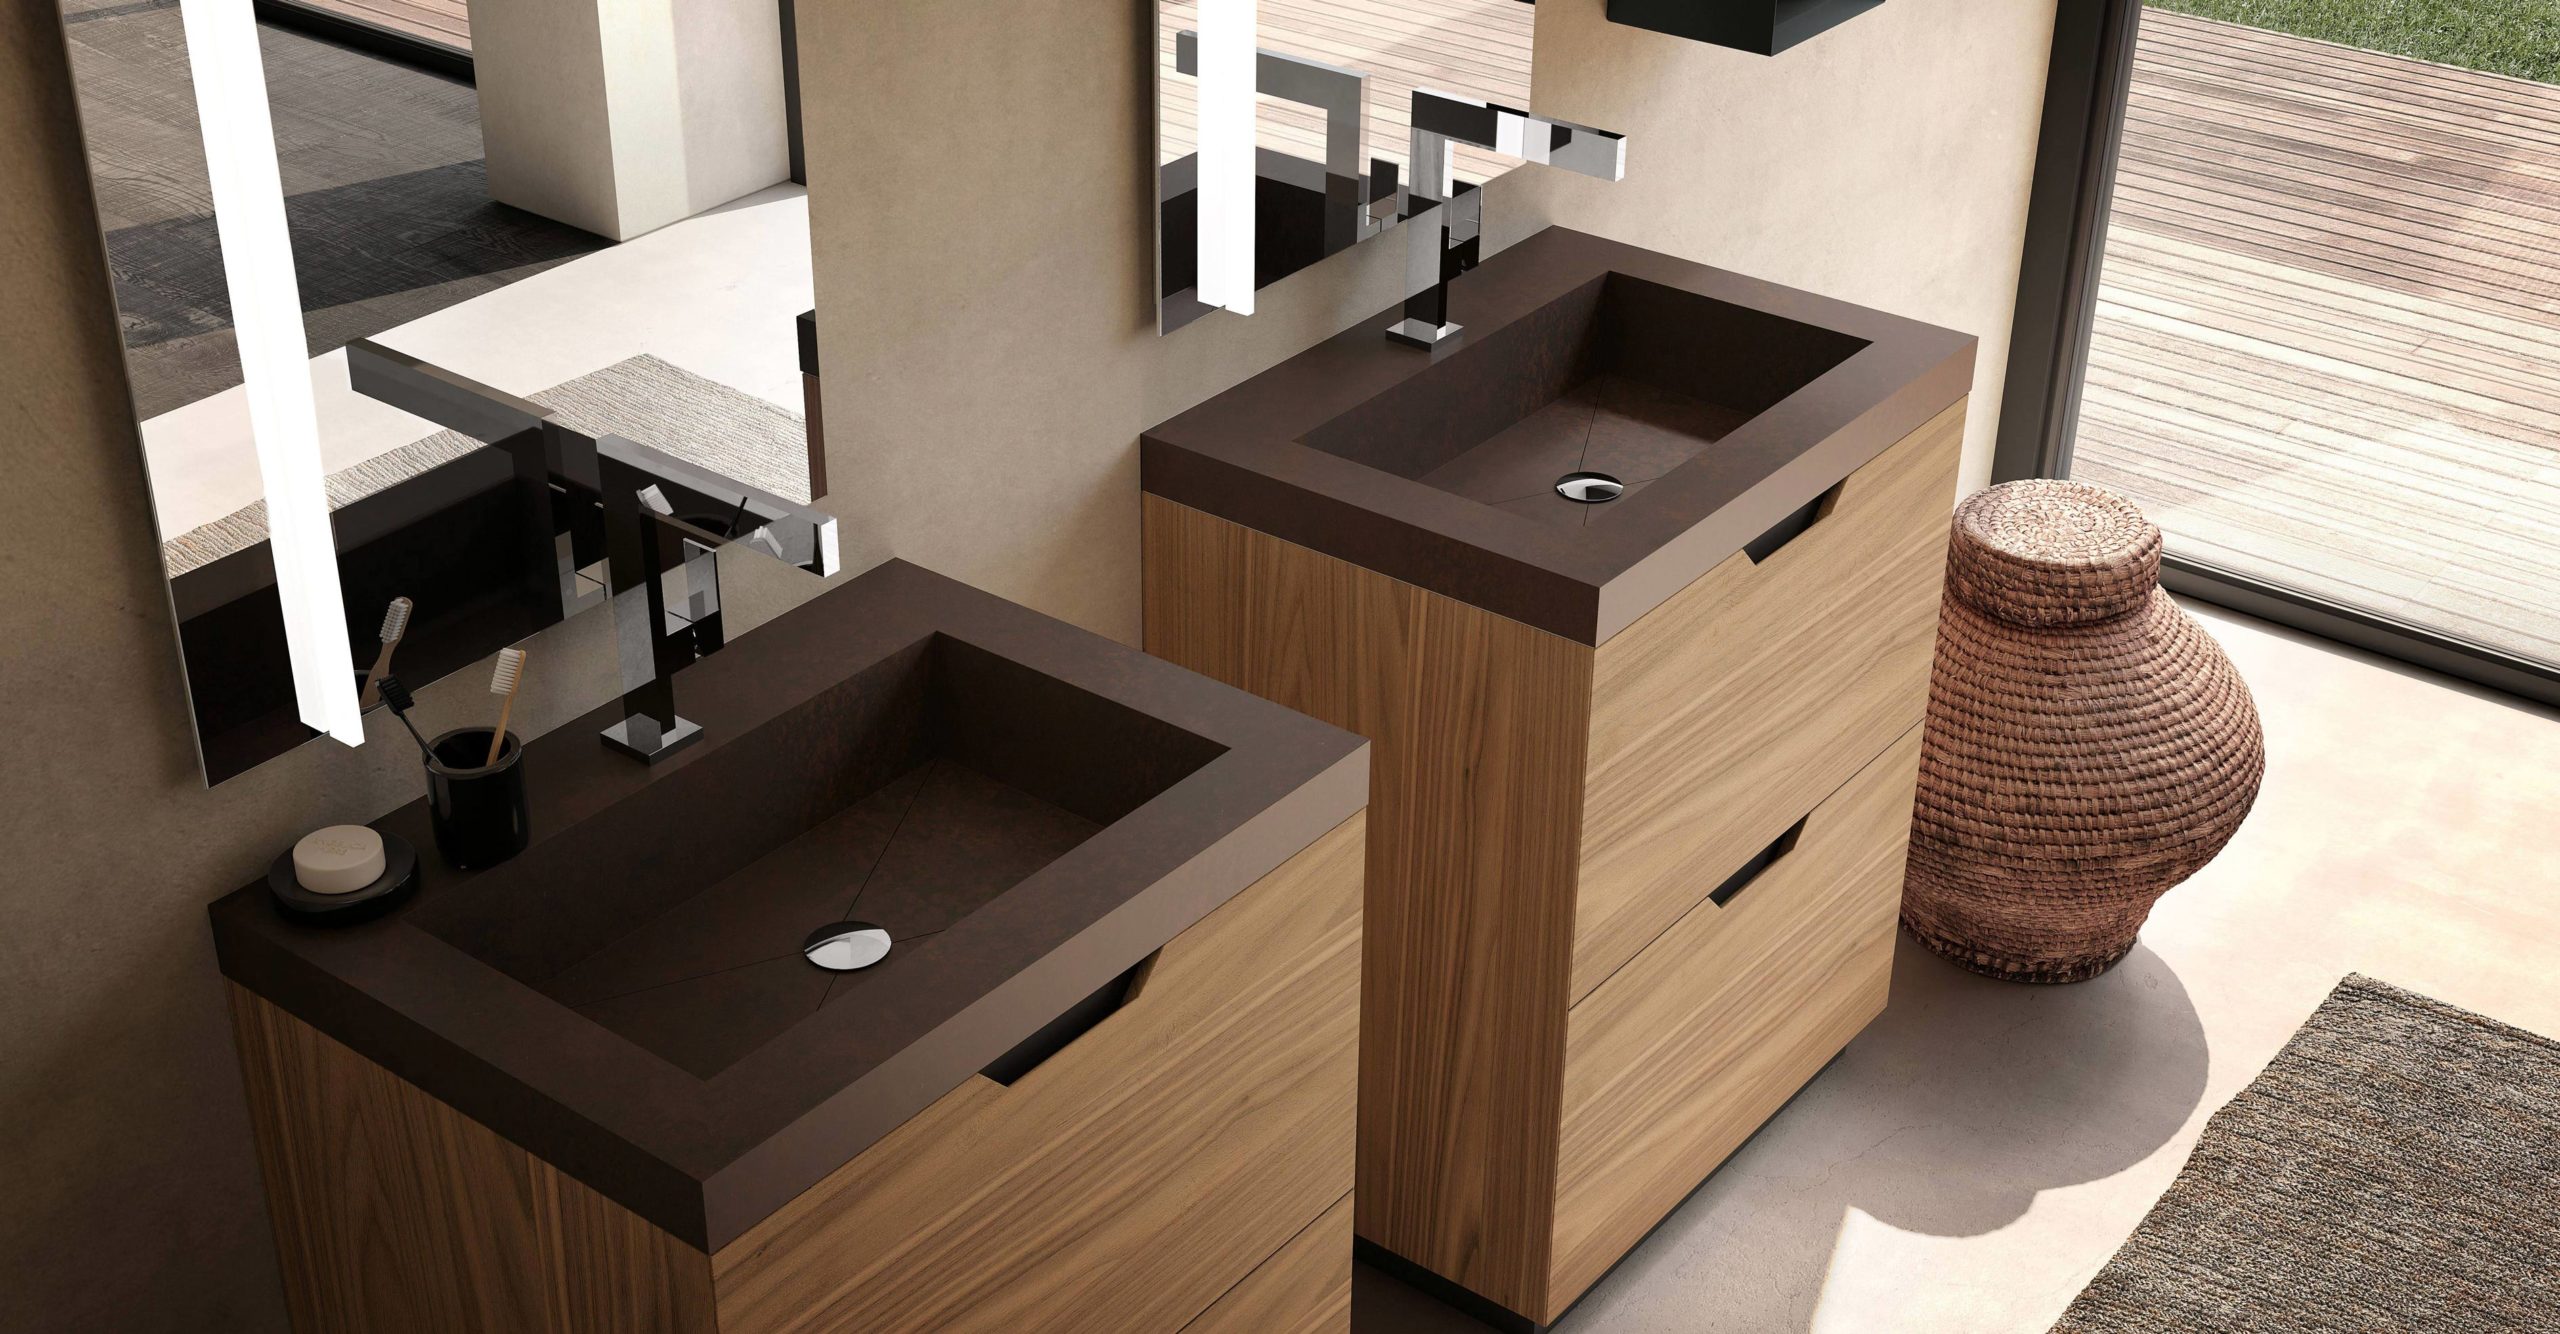 designs for bathrooms transformed